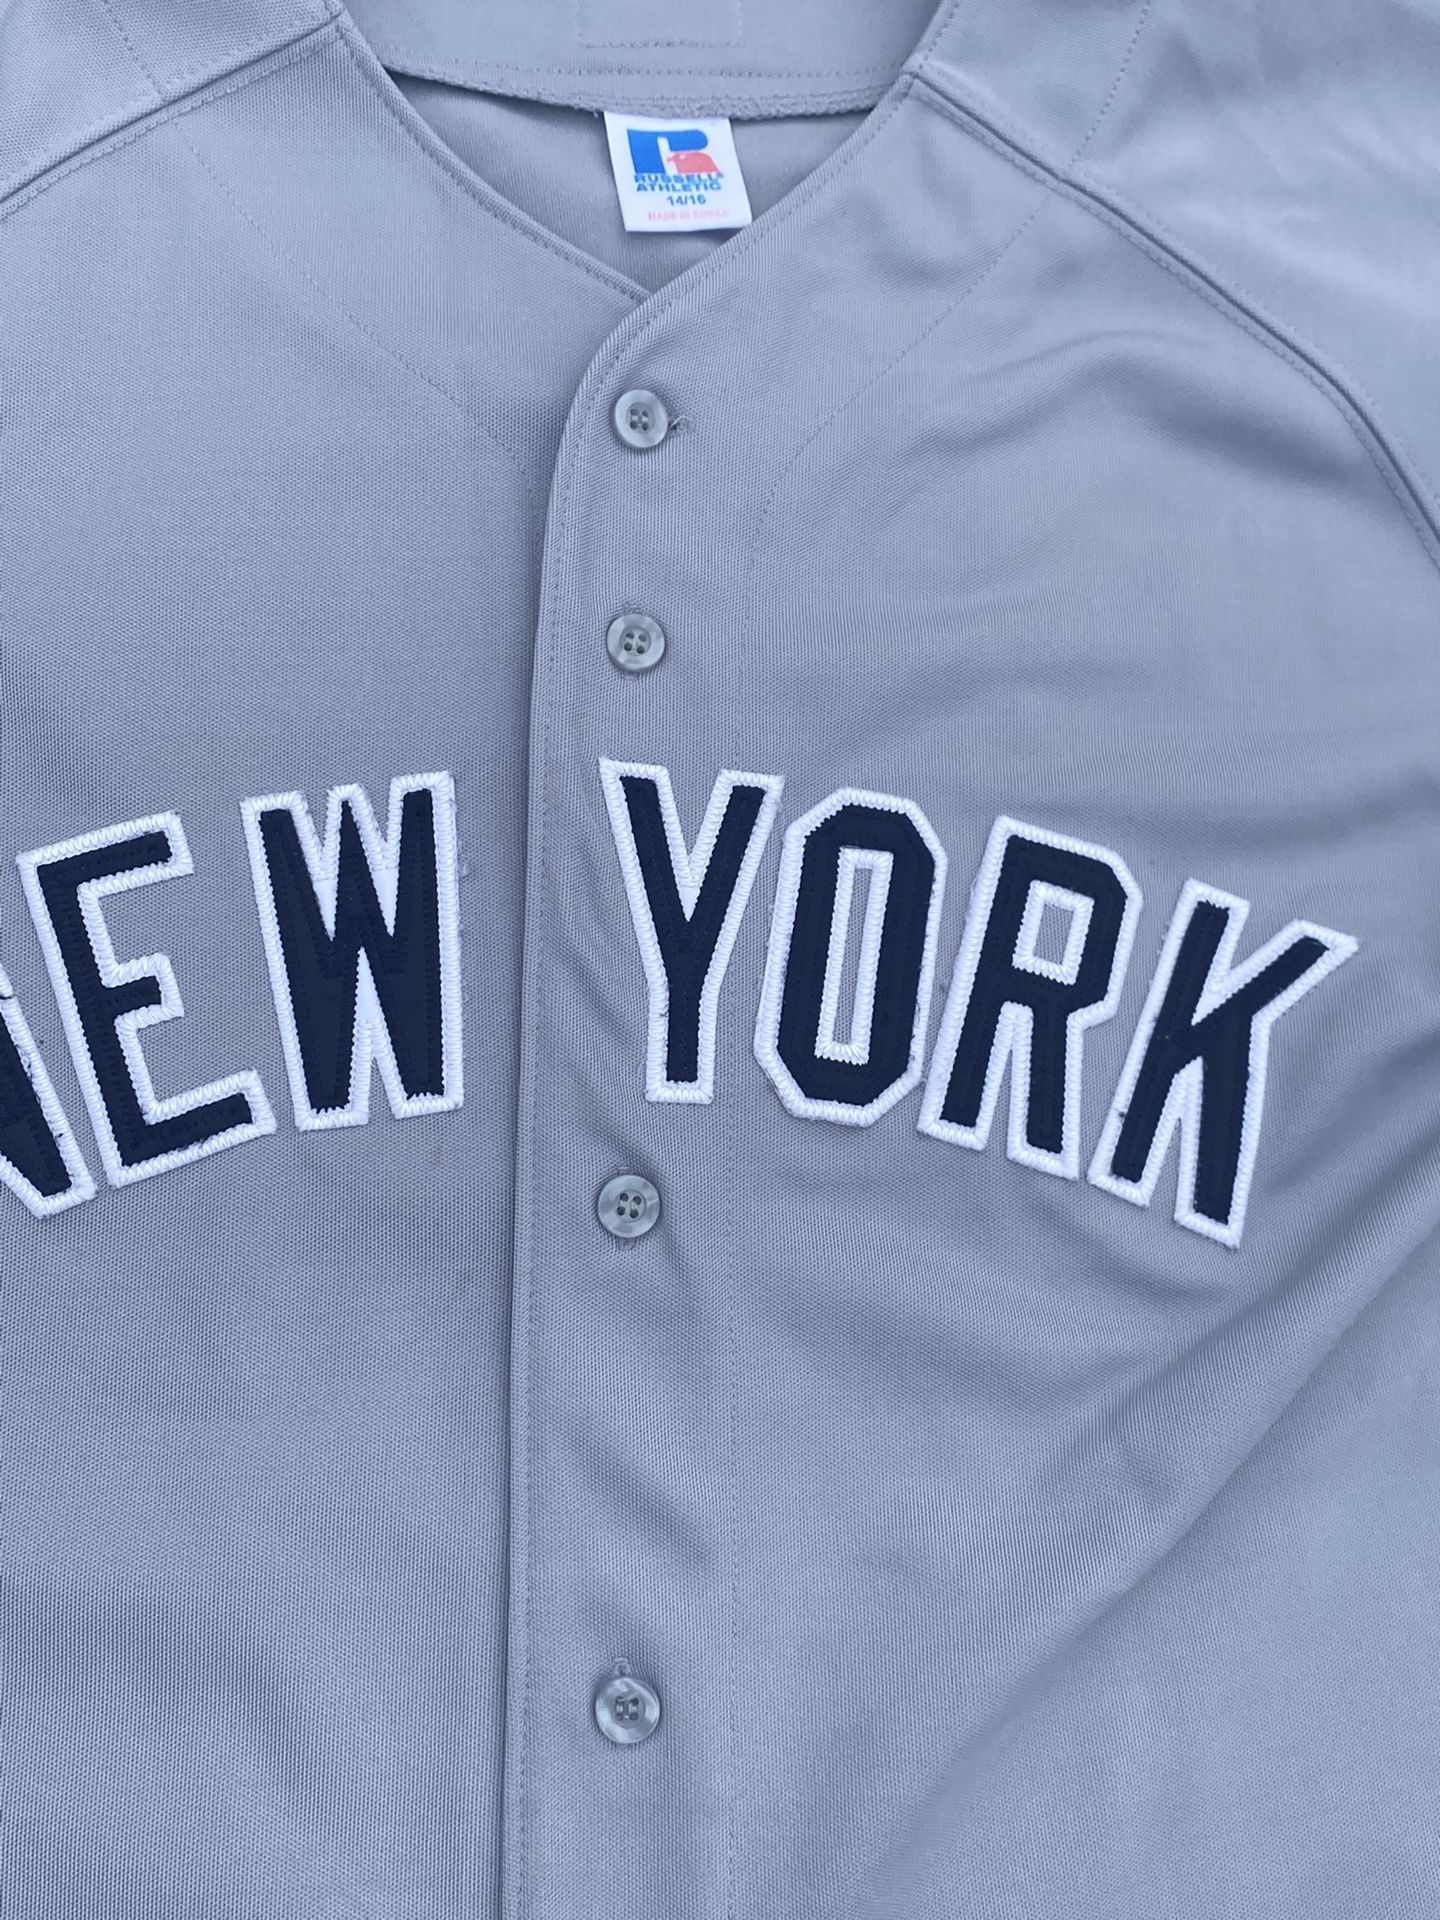 Vintage Russel Athletic NY Yankees Derek Jeter Grey Jersey 14/16 - MLB for  Sale in Egg Harbor Township, NJ - OfferUp